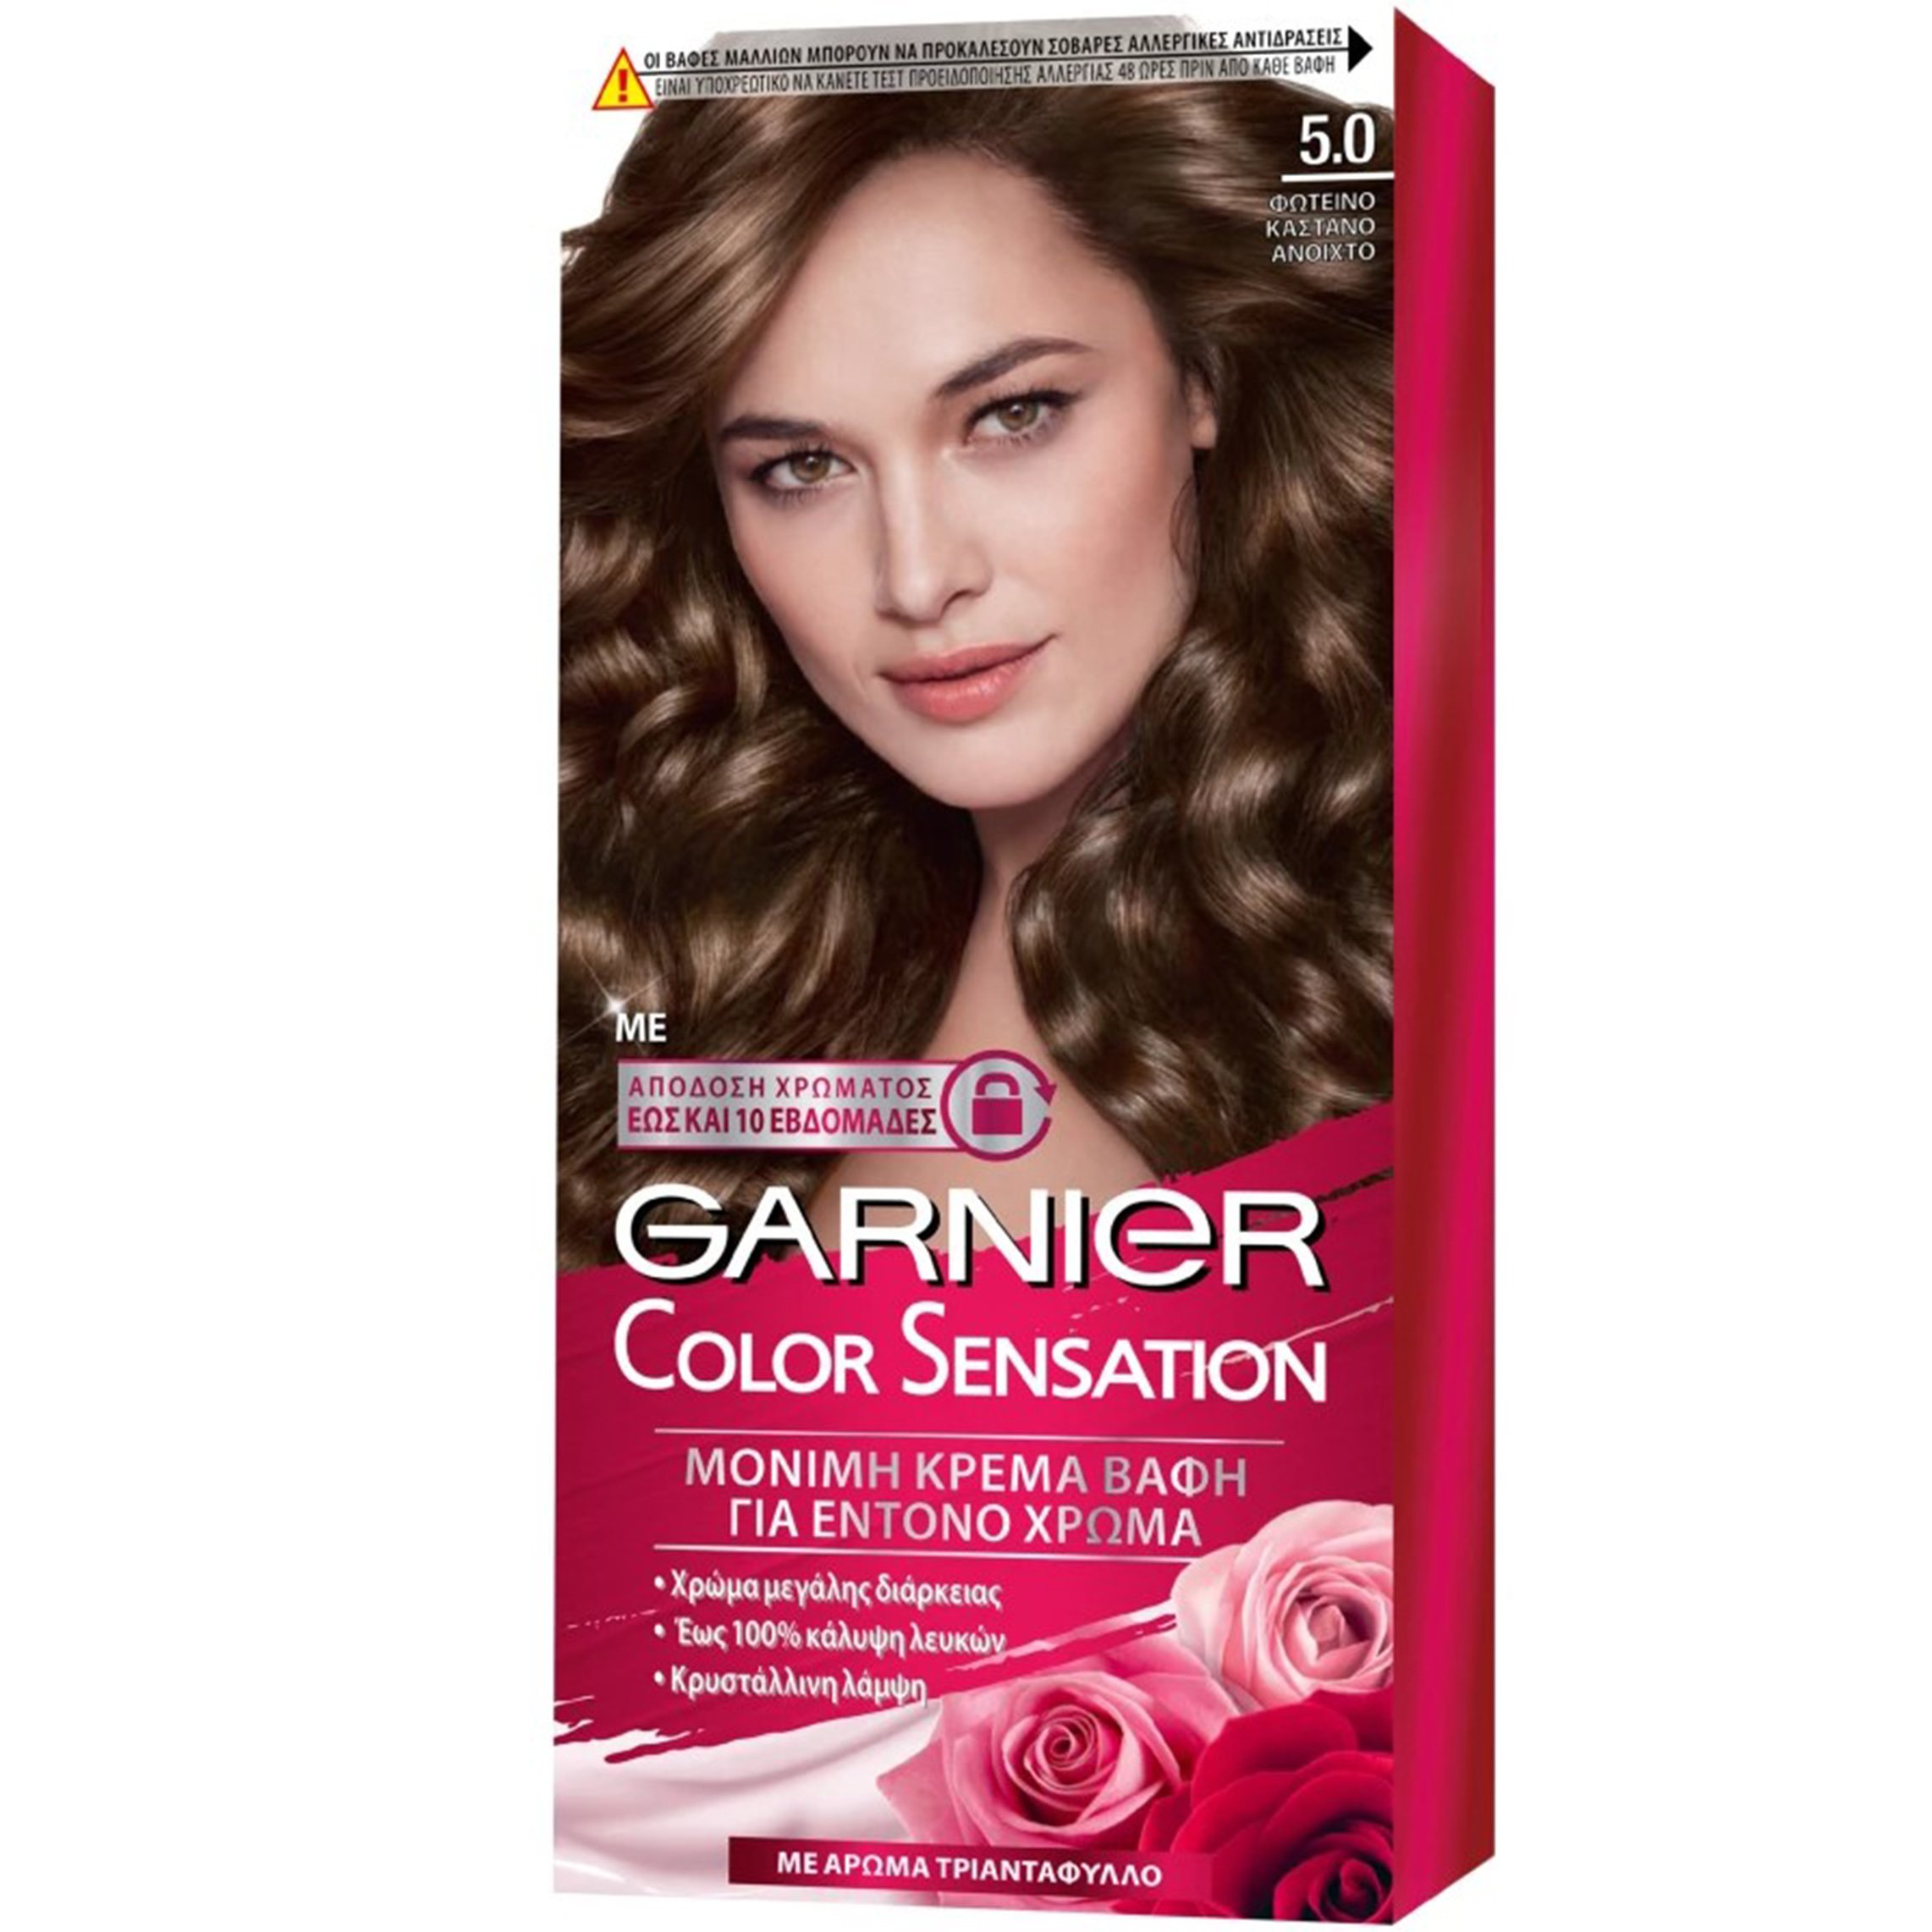 Garnier Color Sensation Permanent Hair Color Kit Μόνιμη Κρέμα Βαφή Μαλλιών με Άρωμα Τριαντάφυλλο 1 Τεμάχιο – 5.0 Φωτεινό Καστανό Ανοιχτό